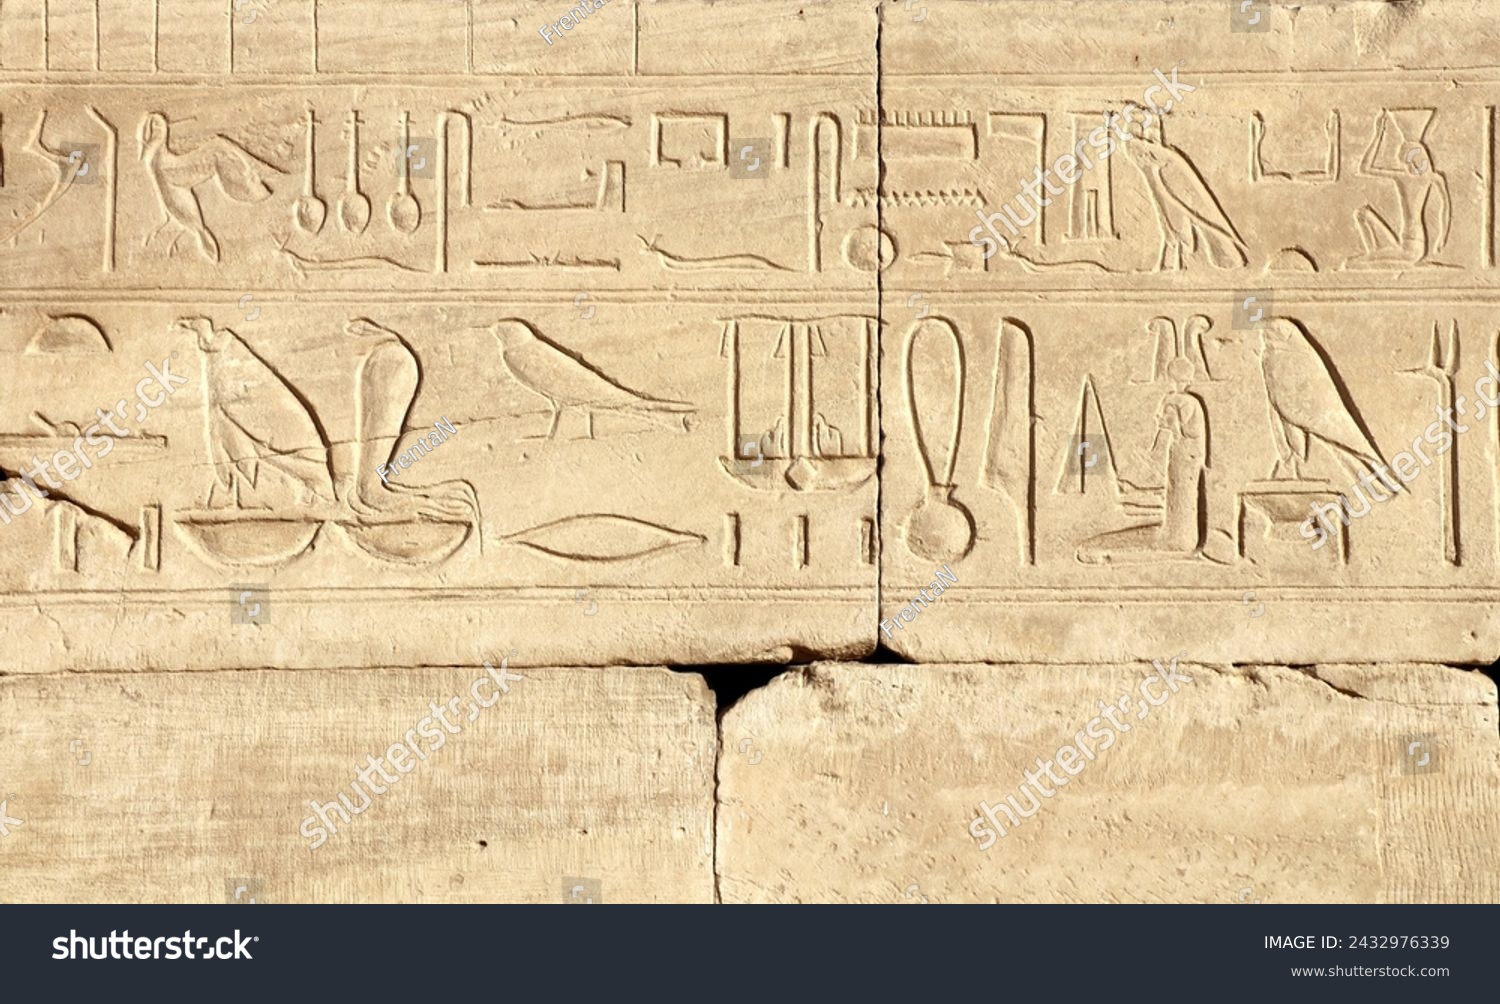 Ancient Egyptian hieroglyphs on stone wall, Karnak Temple Complex, Luxor, Egypt, Africa. Stone carvings with hieroglyphs at Karnak temple, Luxor, Thebes #2432976339